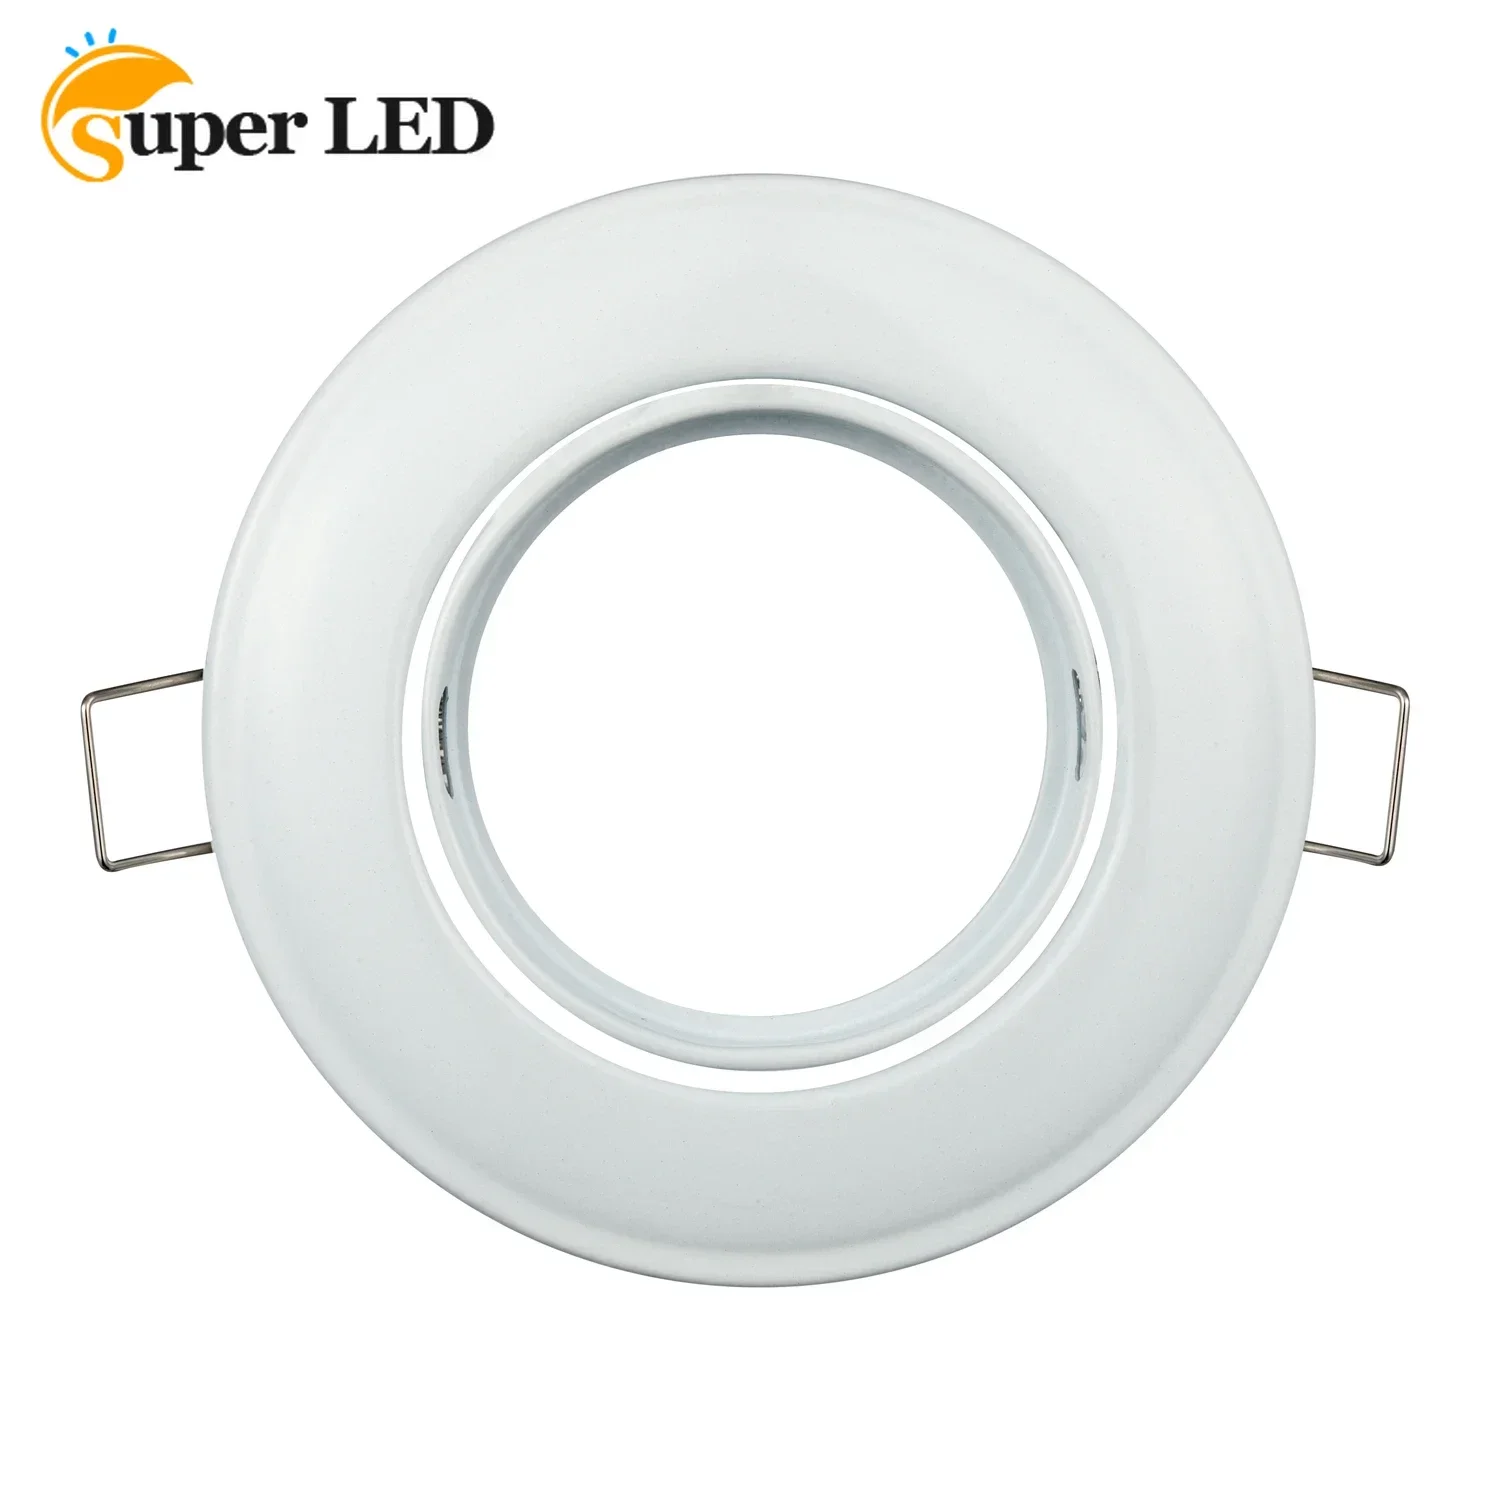 

JOYINLED LED Disk Lights Flush Mount Ceiling Light Fixture Recessed Iron Metal Cut Hole 62mm Fixture Frame